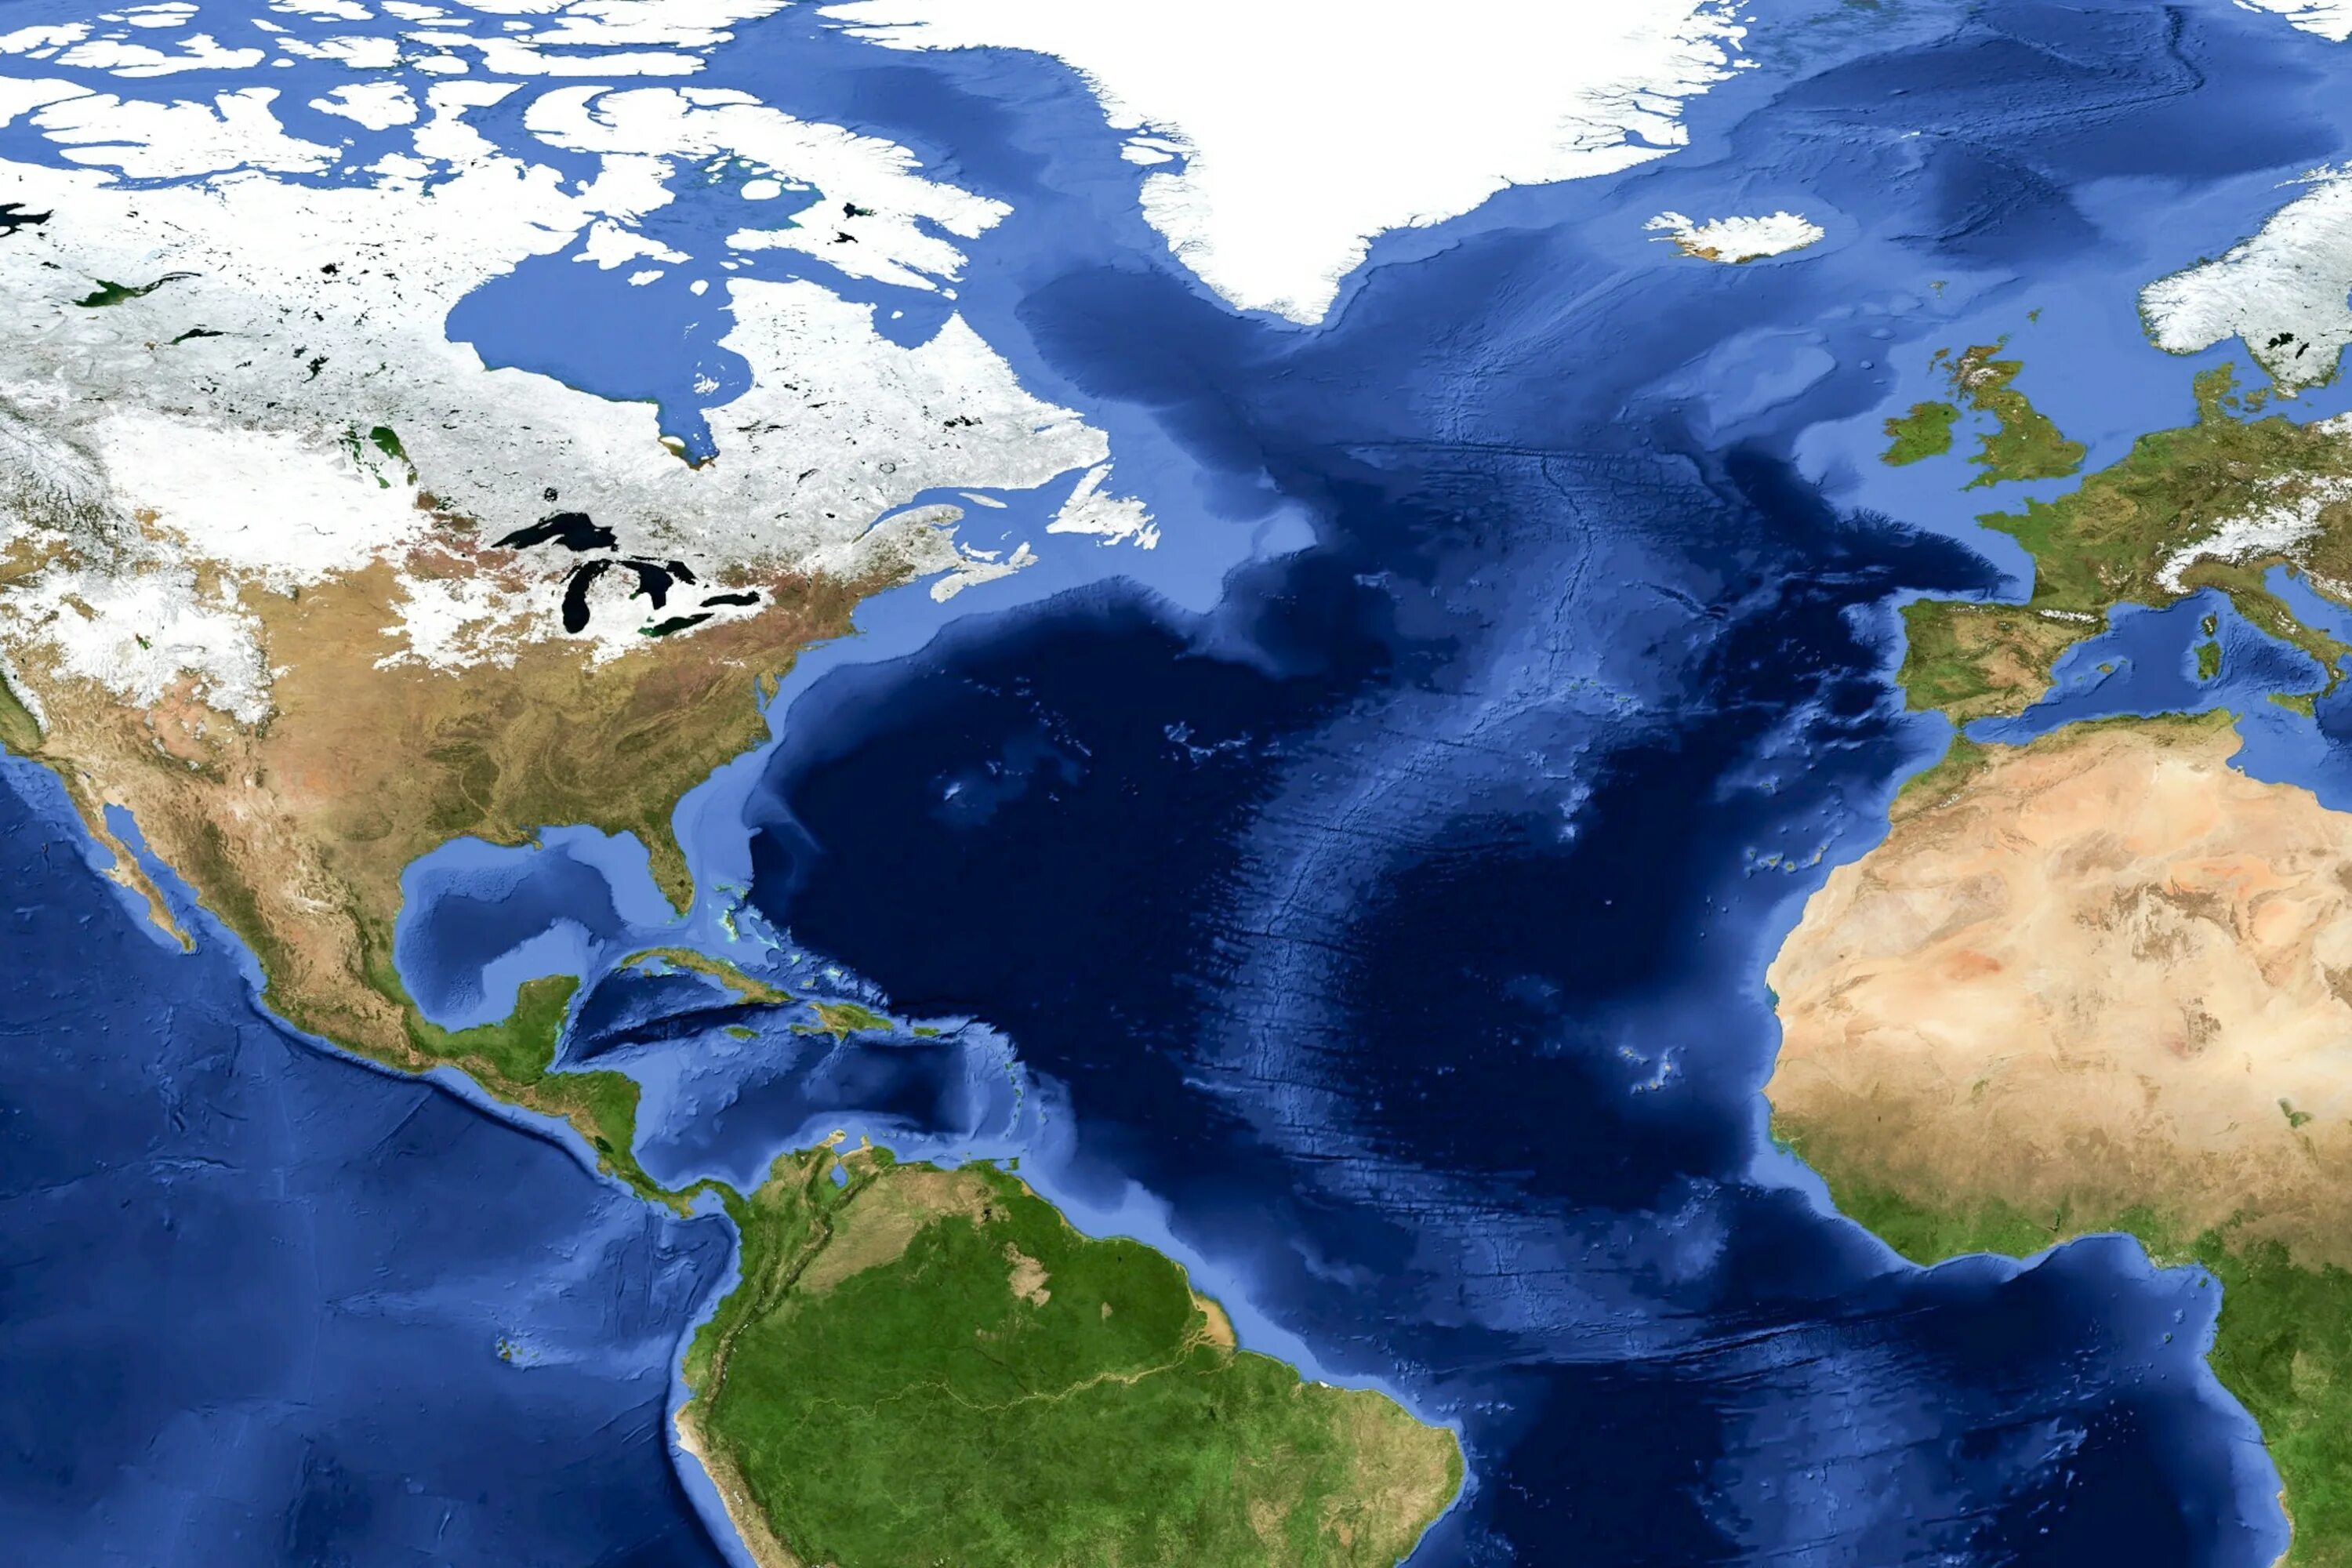 Рельеф поверхности океана. Северная Америка Атлантический океан. Атлантика океан. Атлантический океан Америка. Южная часть Атлантического океана.